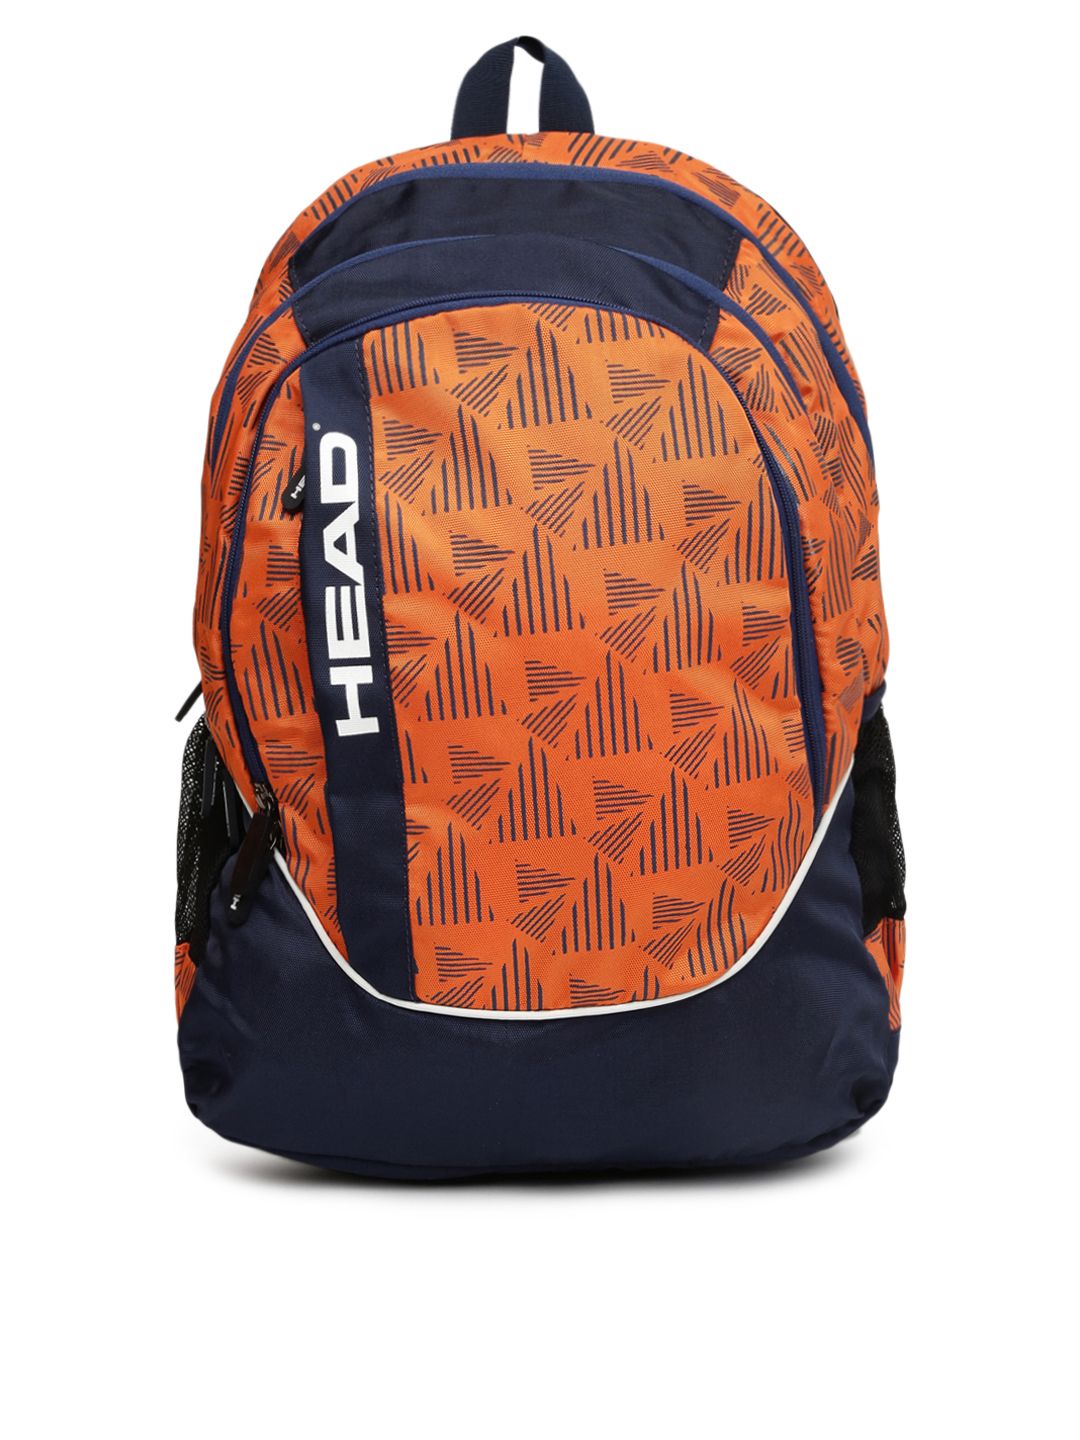 Head Unisex Orange & Navy Blue Graphic Backpack Price in India